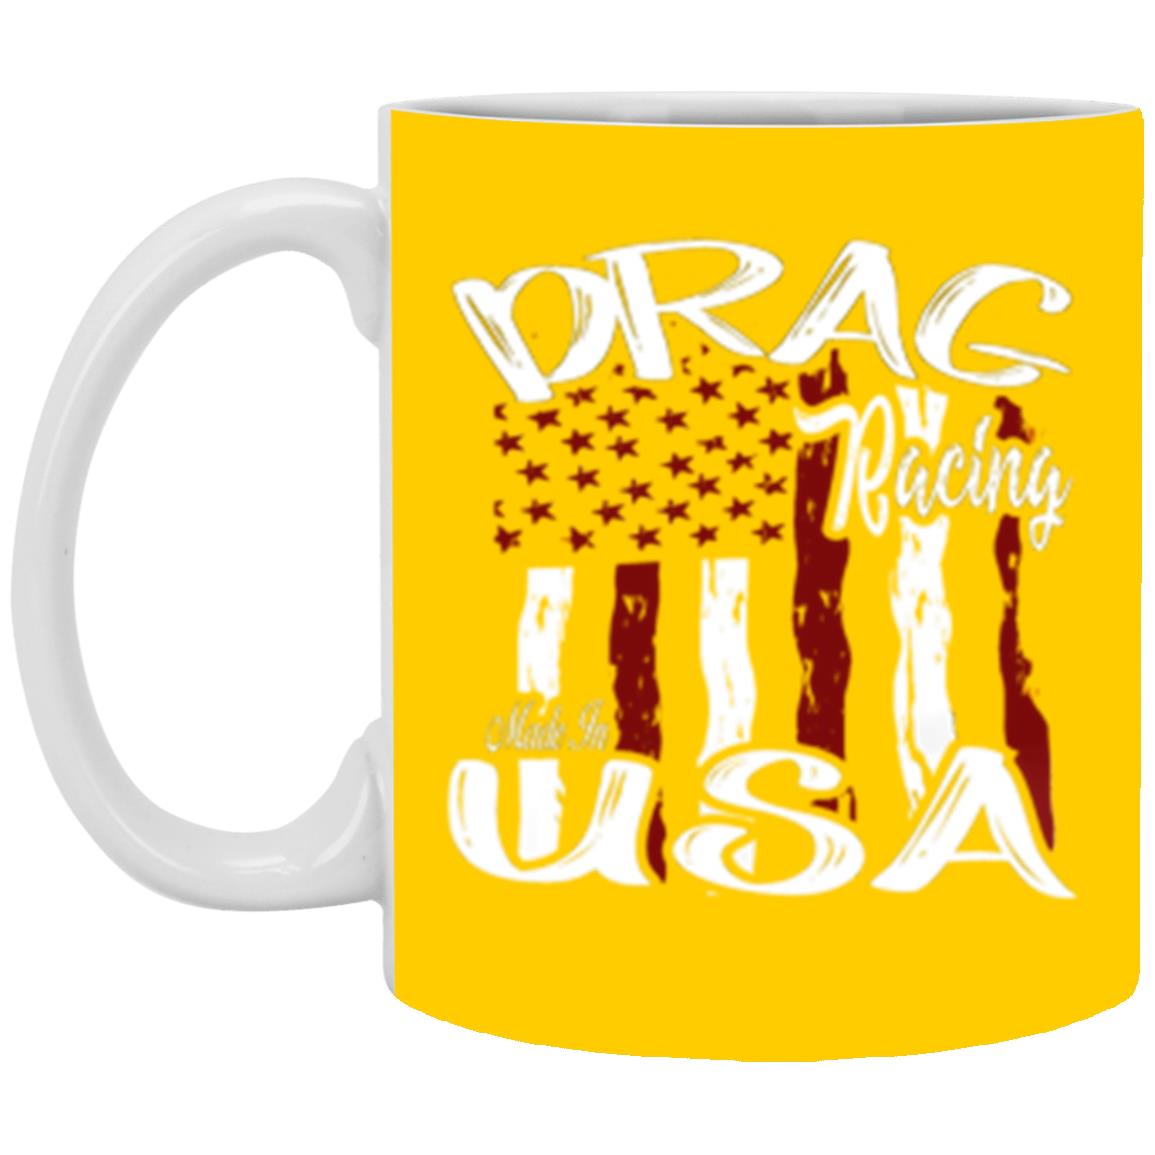 Drag Racing Made In USA 11 oz. White Mug